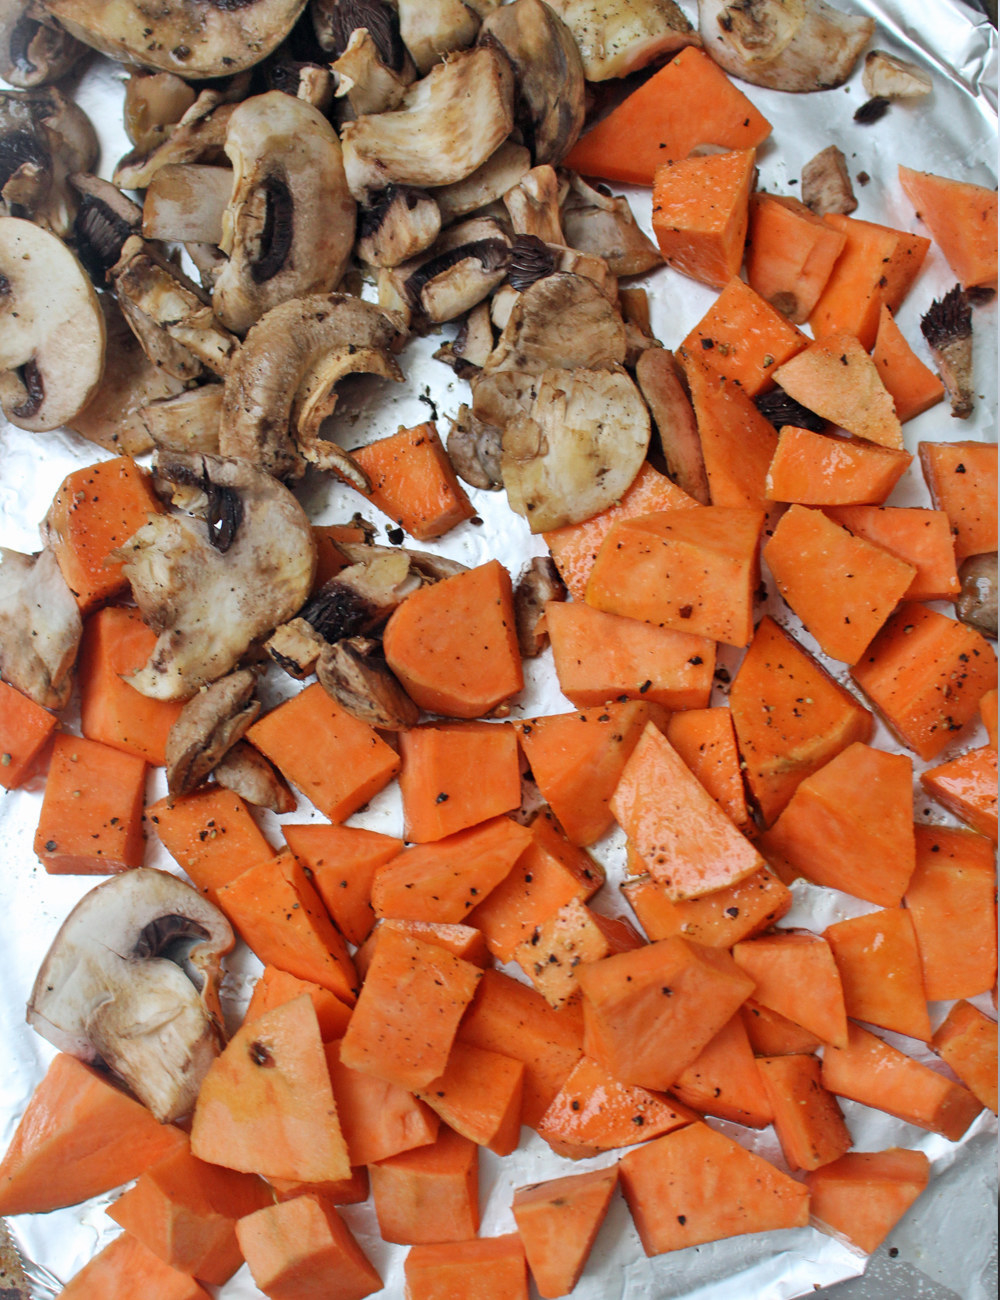 Chopped mushrooms and sweet potato.